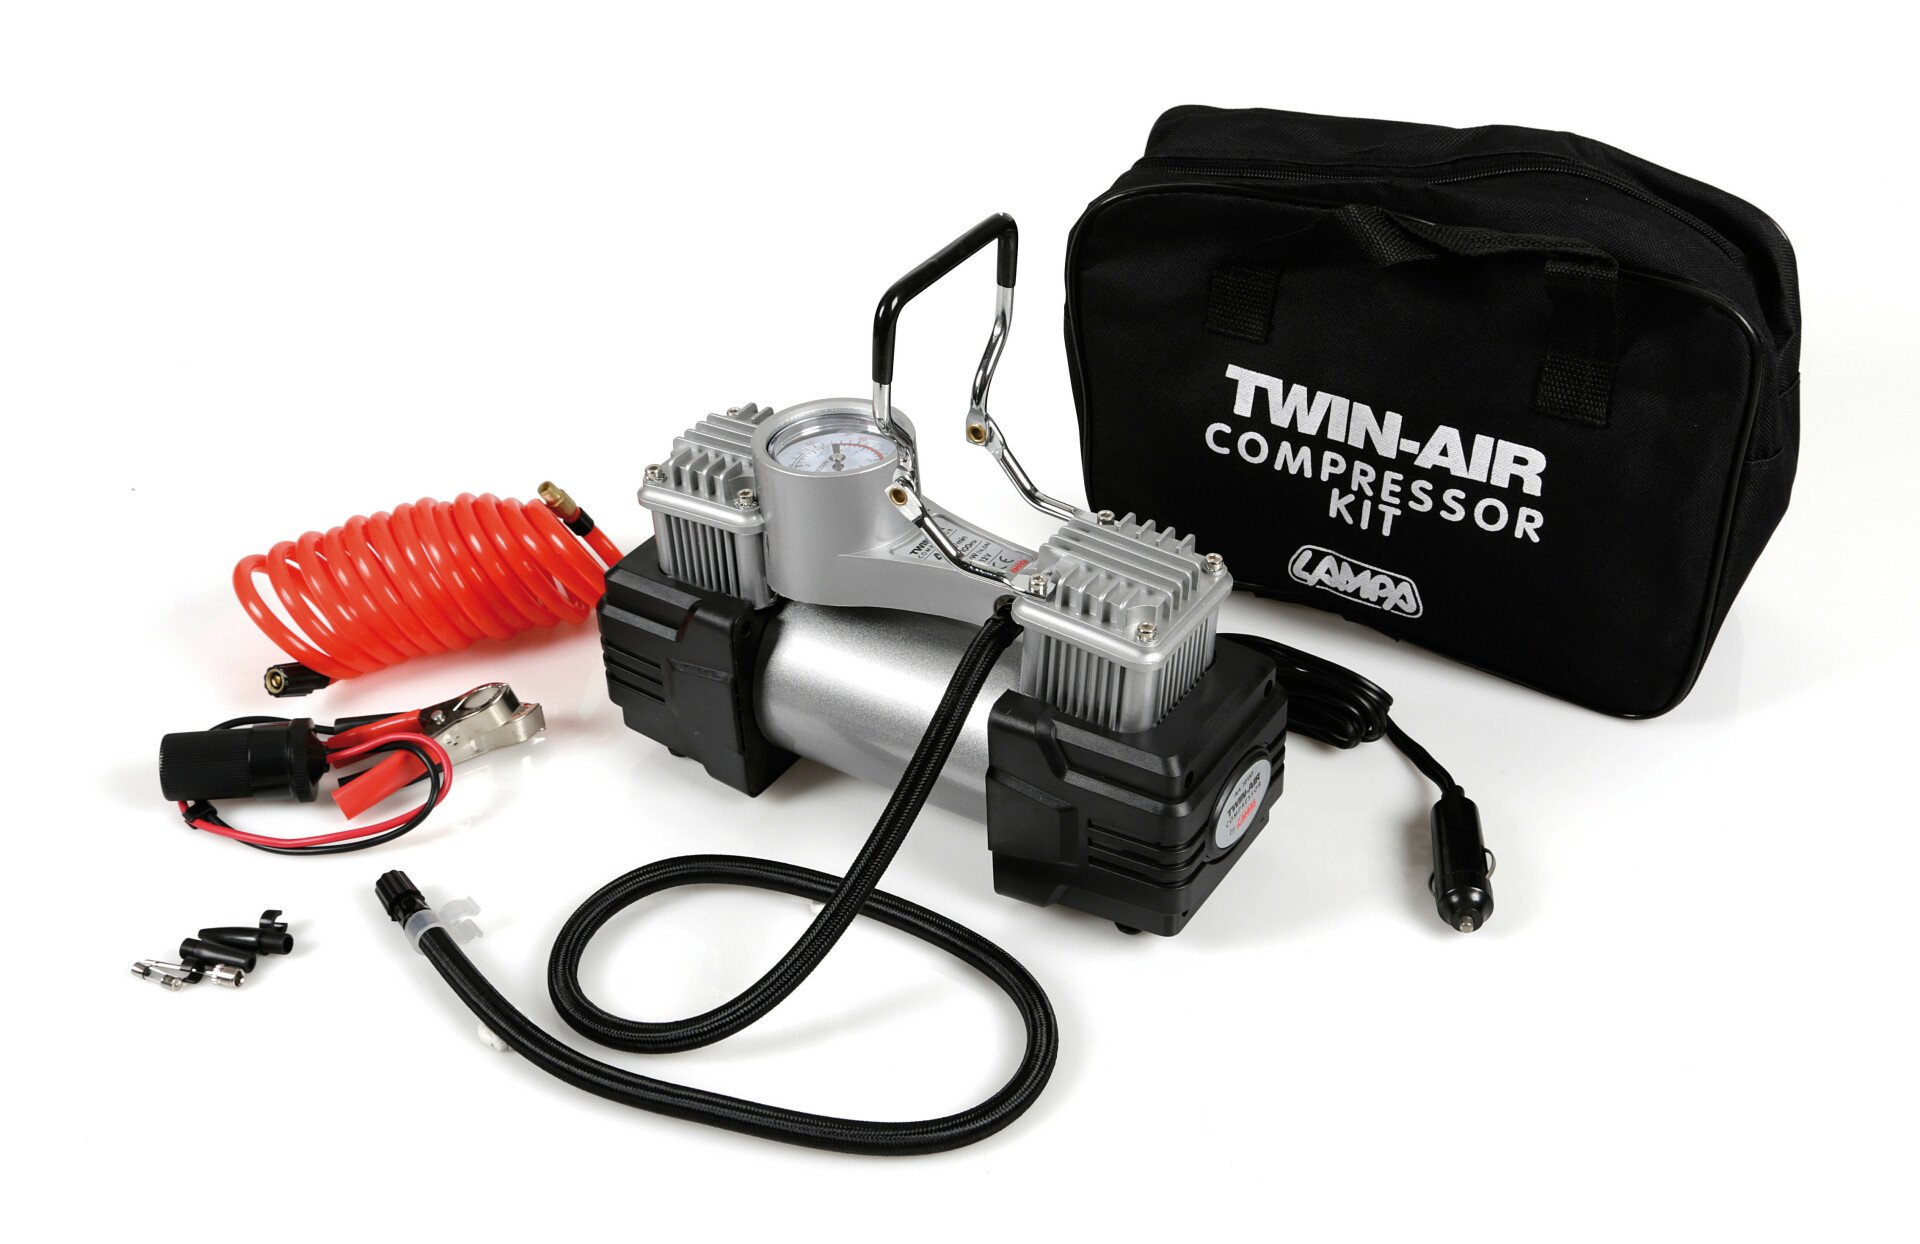 Twin-Air SUV kéthengeres kompresszor 12V 200W thumb